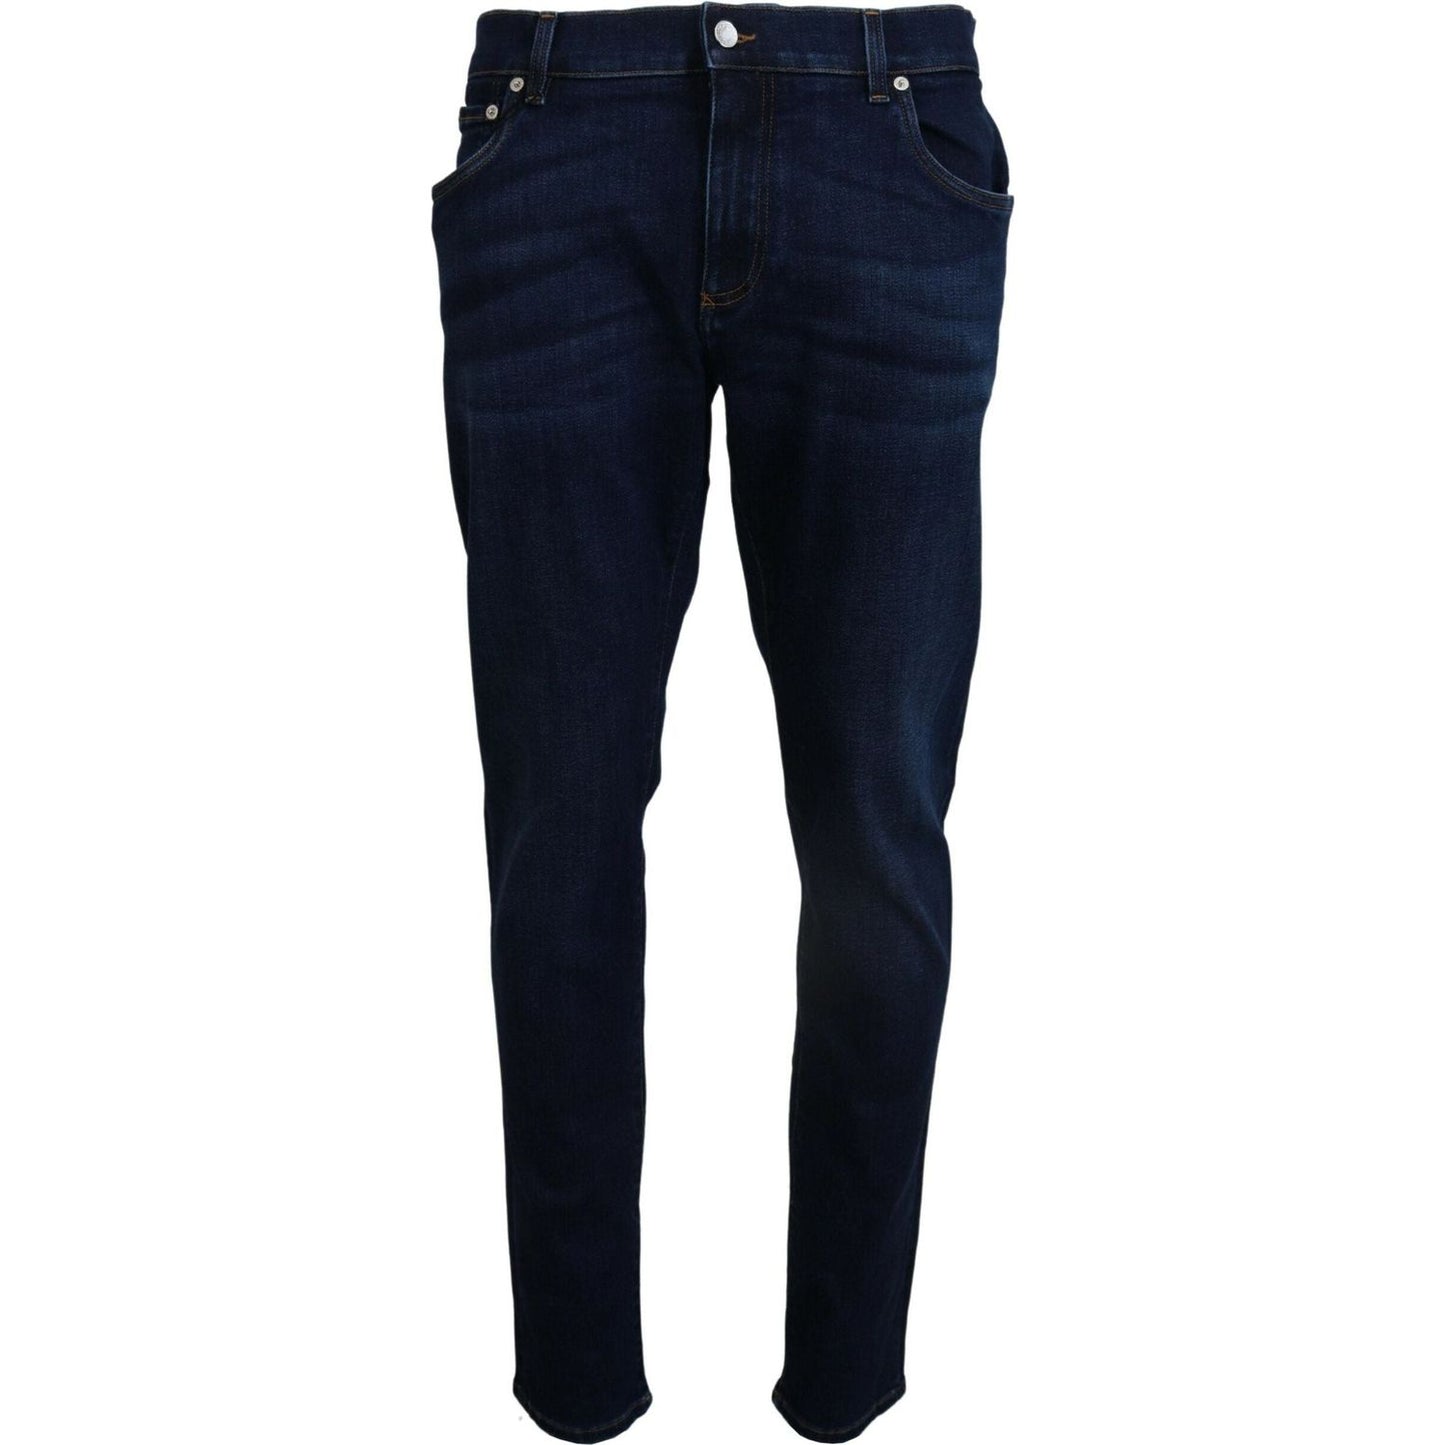 Dolce & Gabbana Elegant Slim Fit Dark Blue Denim Jeans dark-blue-cotton-denim-skinny-jeans